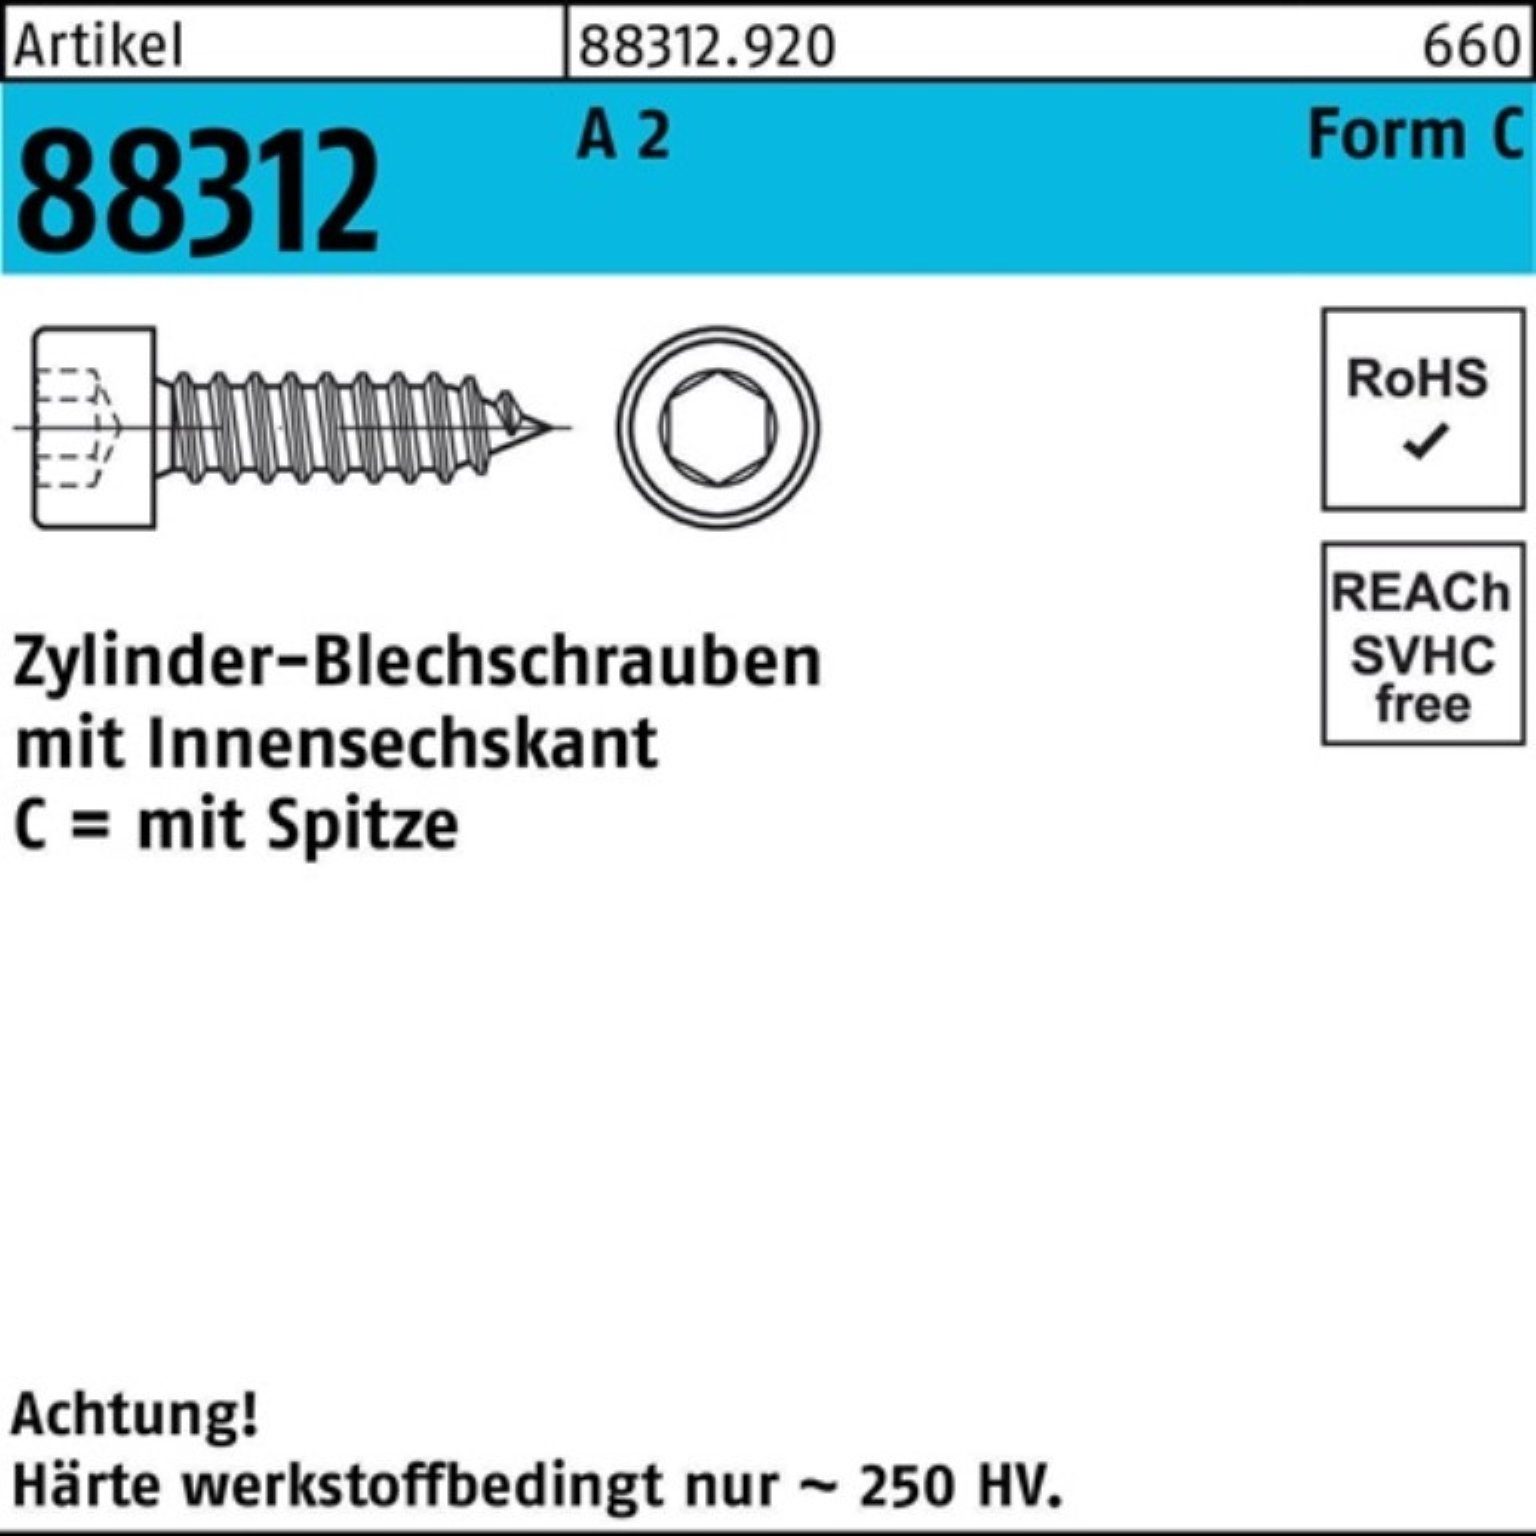 Reyher Blechschraube 200er Pack Zylinderblechschraube R 88312 Spitze/Innen-6kt C 6,3x 60 A